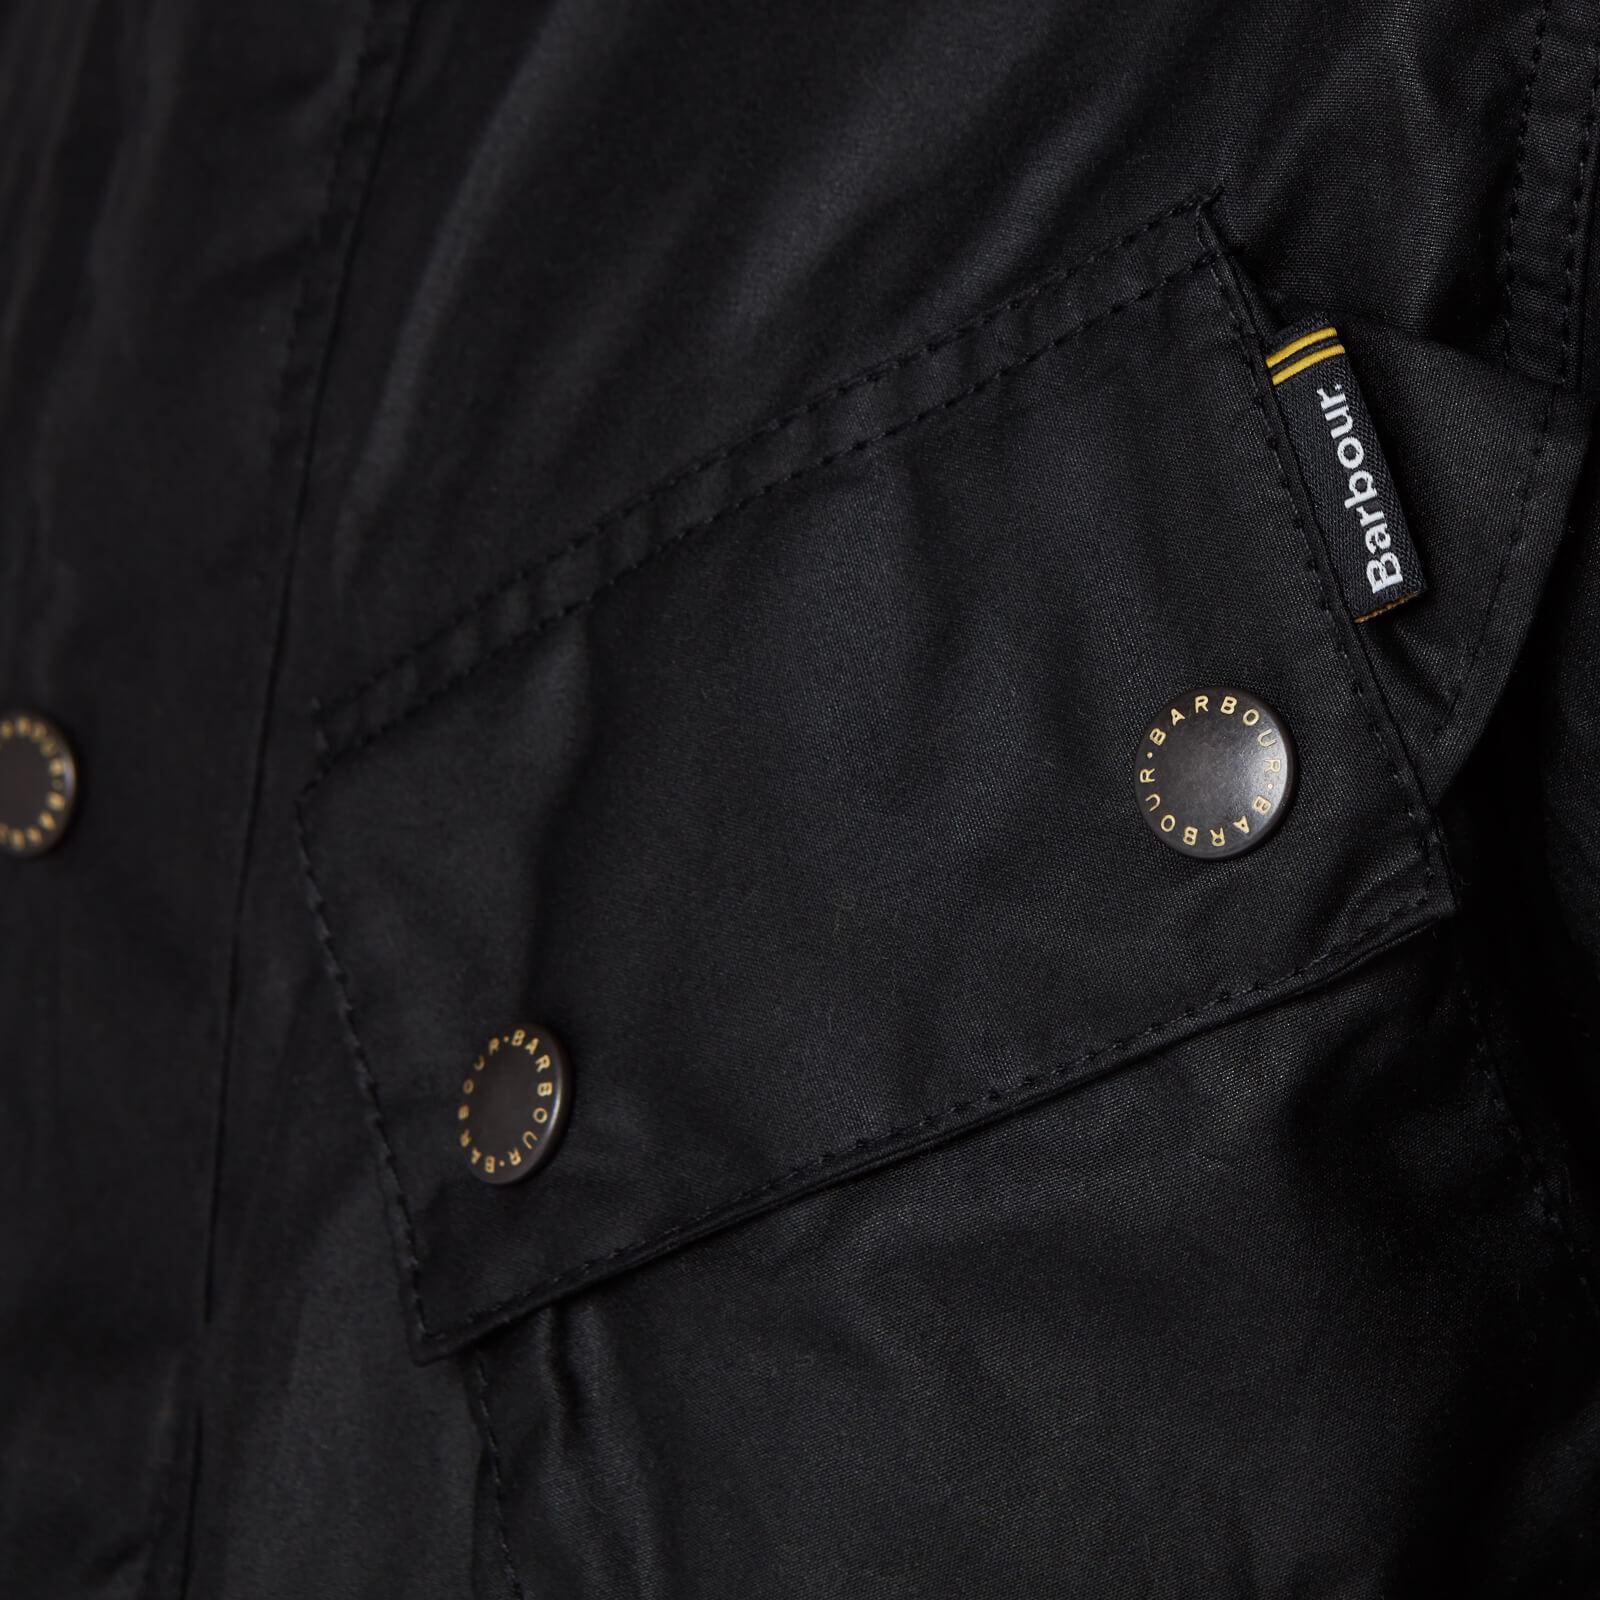 Barbour Cotton Slim International Wax Jacket in Black/Black (Black) for Men  - Save 56% | Lyst